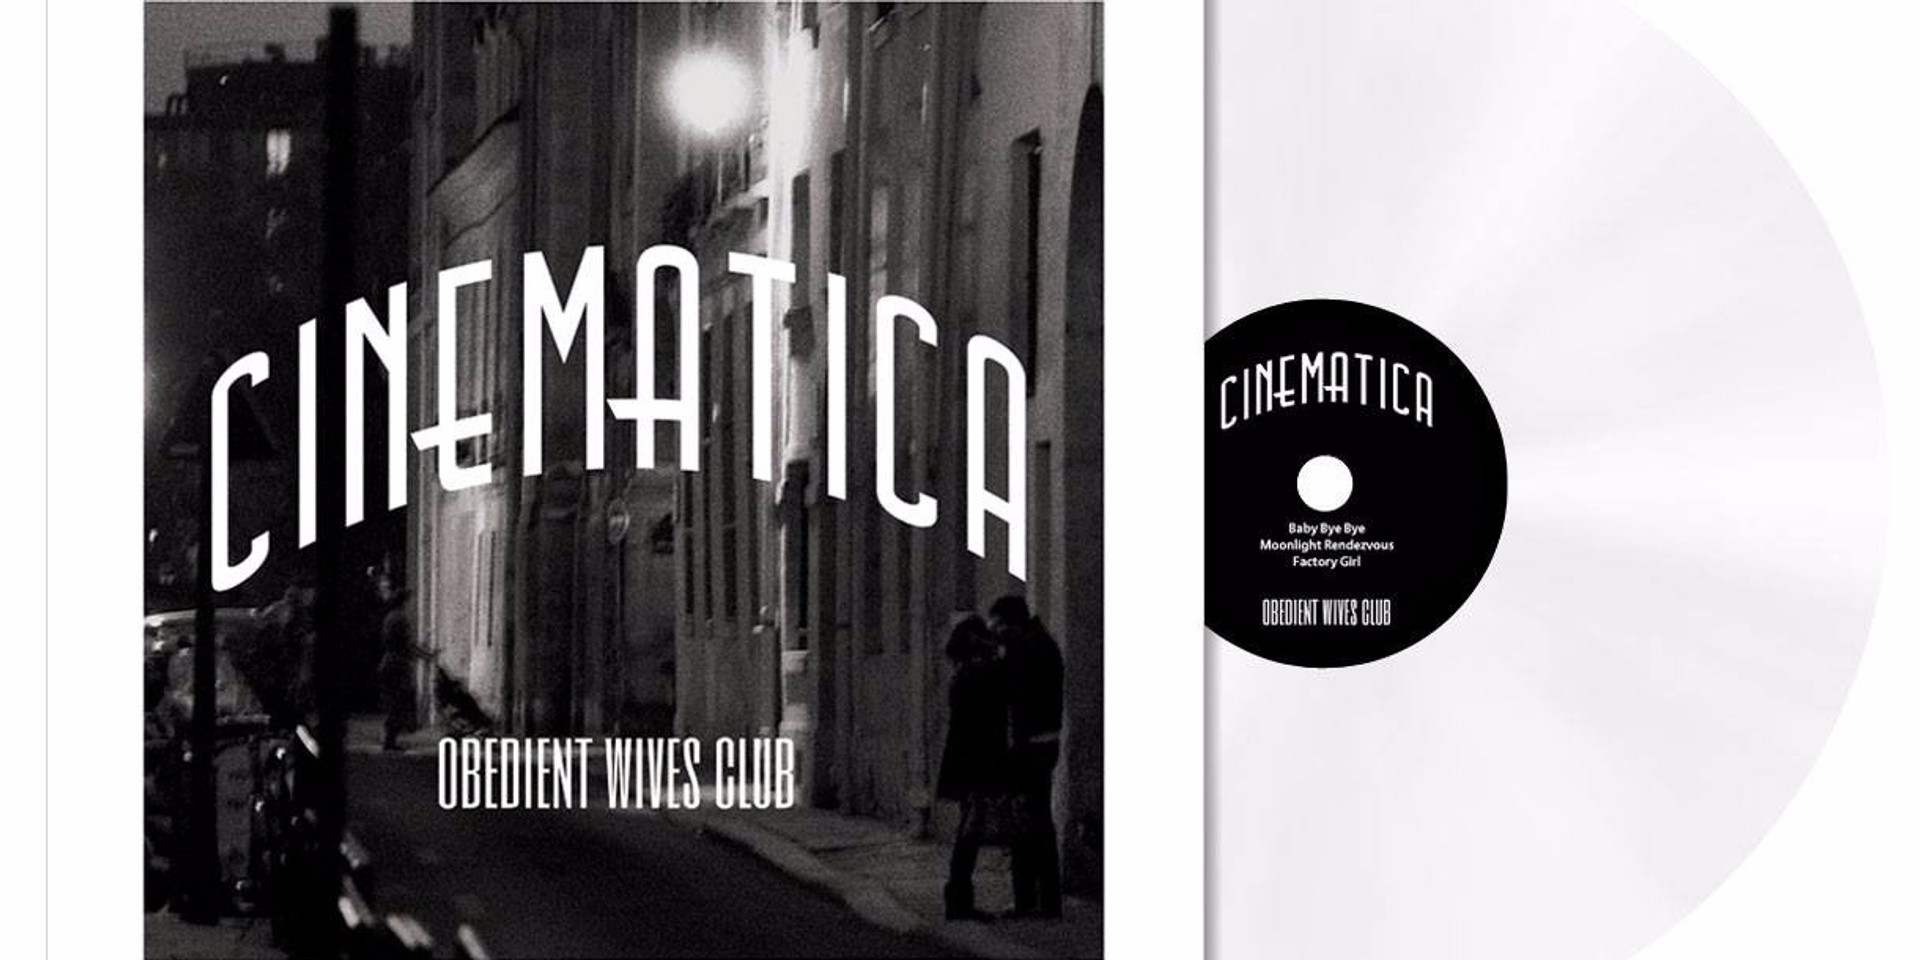 Obedient Wives Club soundtracks 60s' girl-pop romanticism on new EP, Cinematica — listen